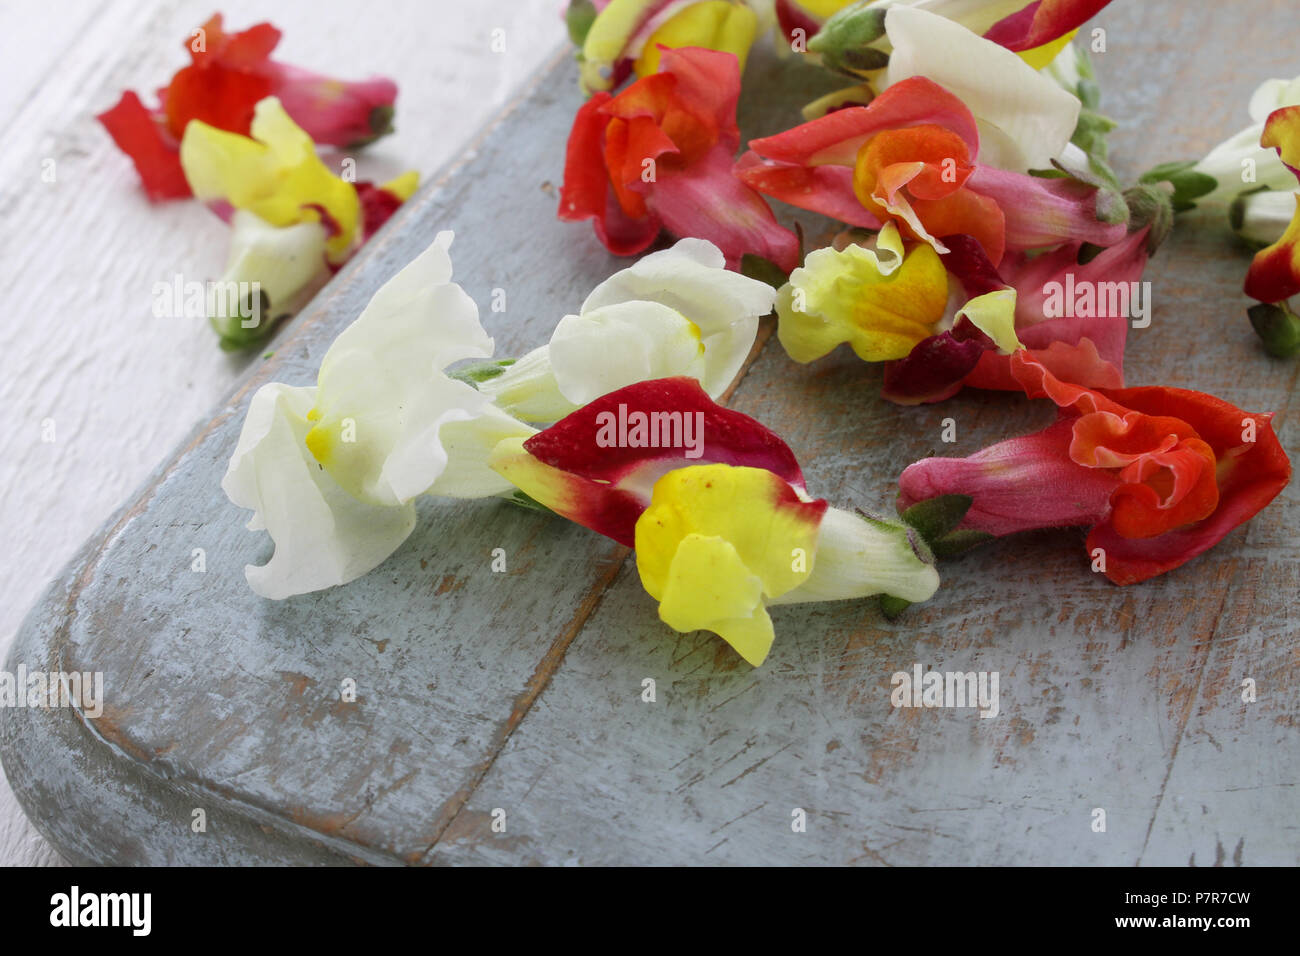 edible snapdraggon flowers Stock Photo